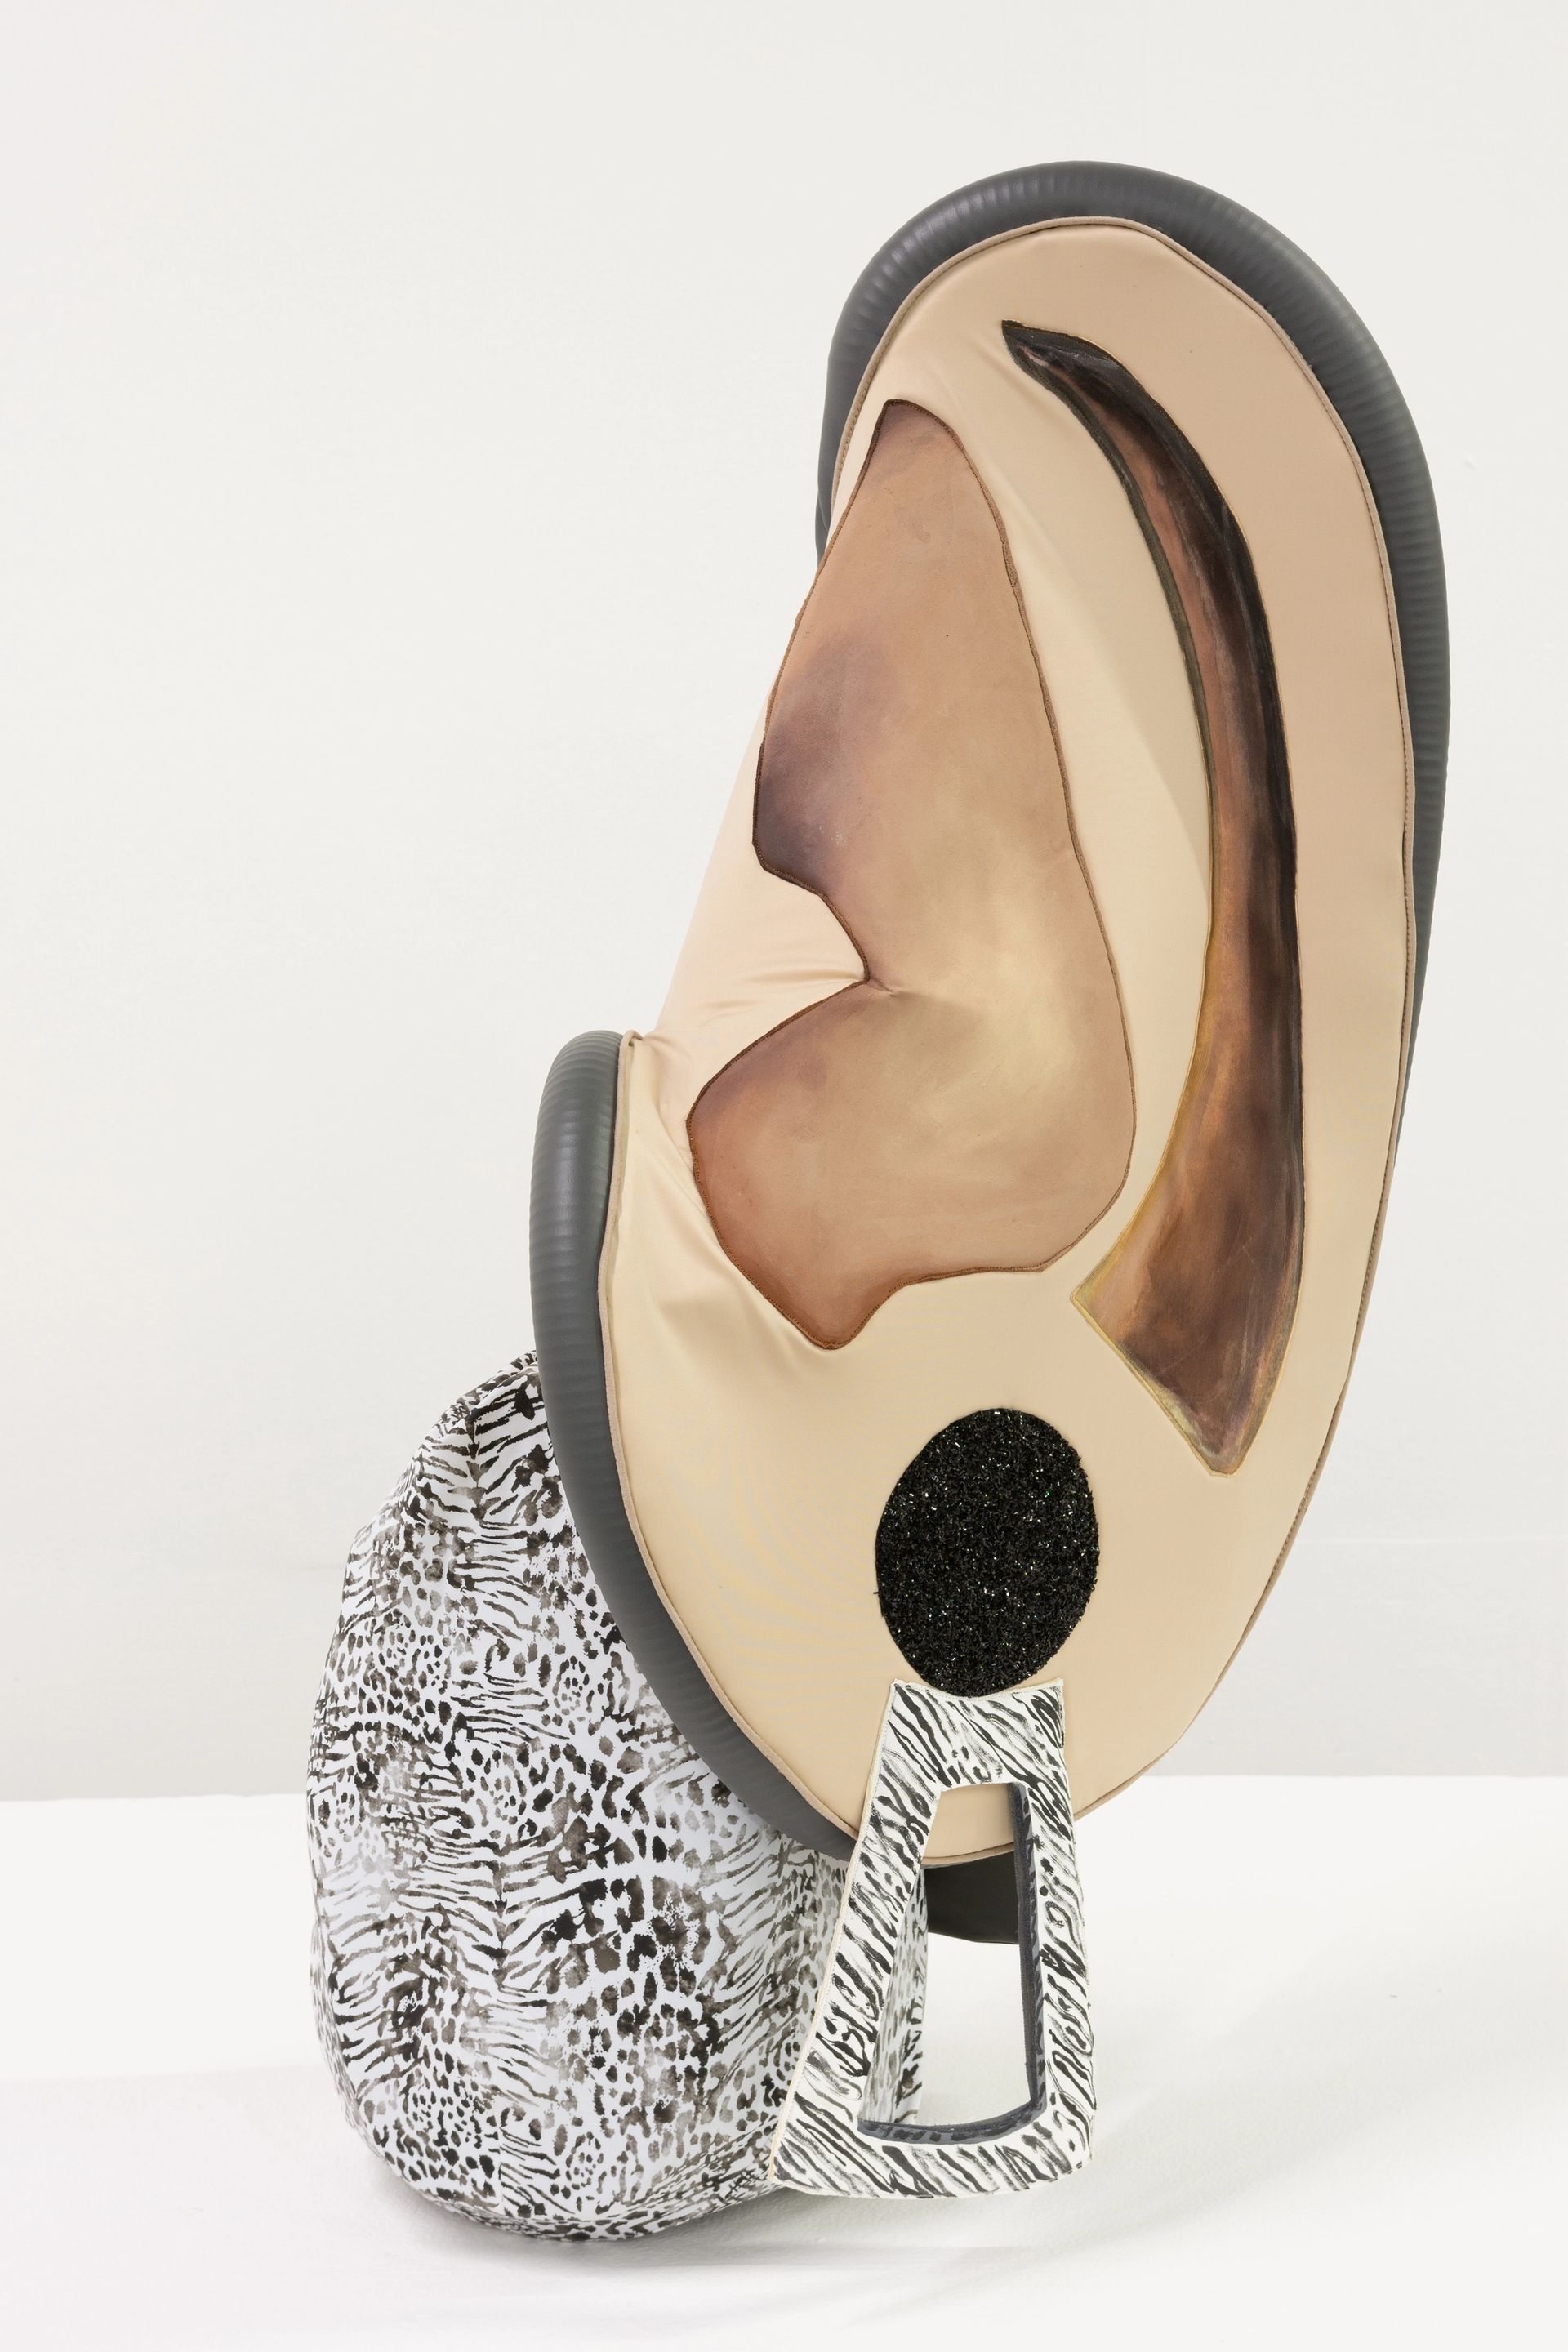 Ana Navas, Ear III, 2019, vacuum cleaner, fabric, acrylic, 88 × 40 × 35 cm, photo: Diego Torres